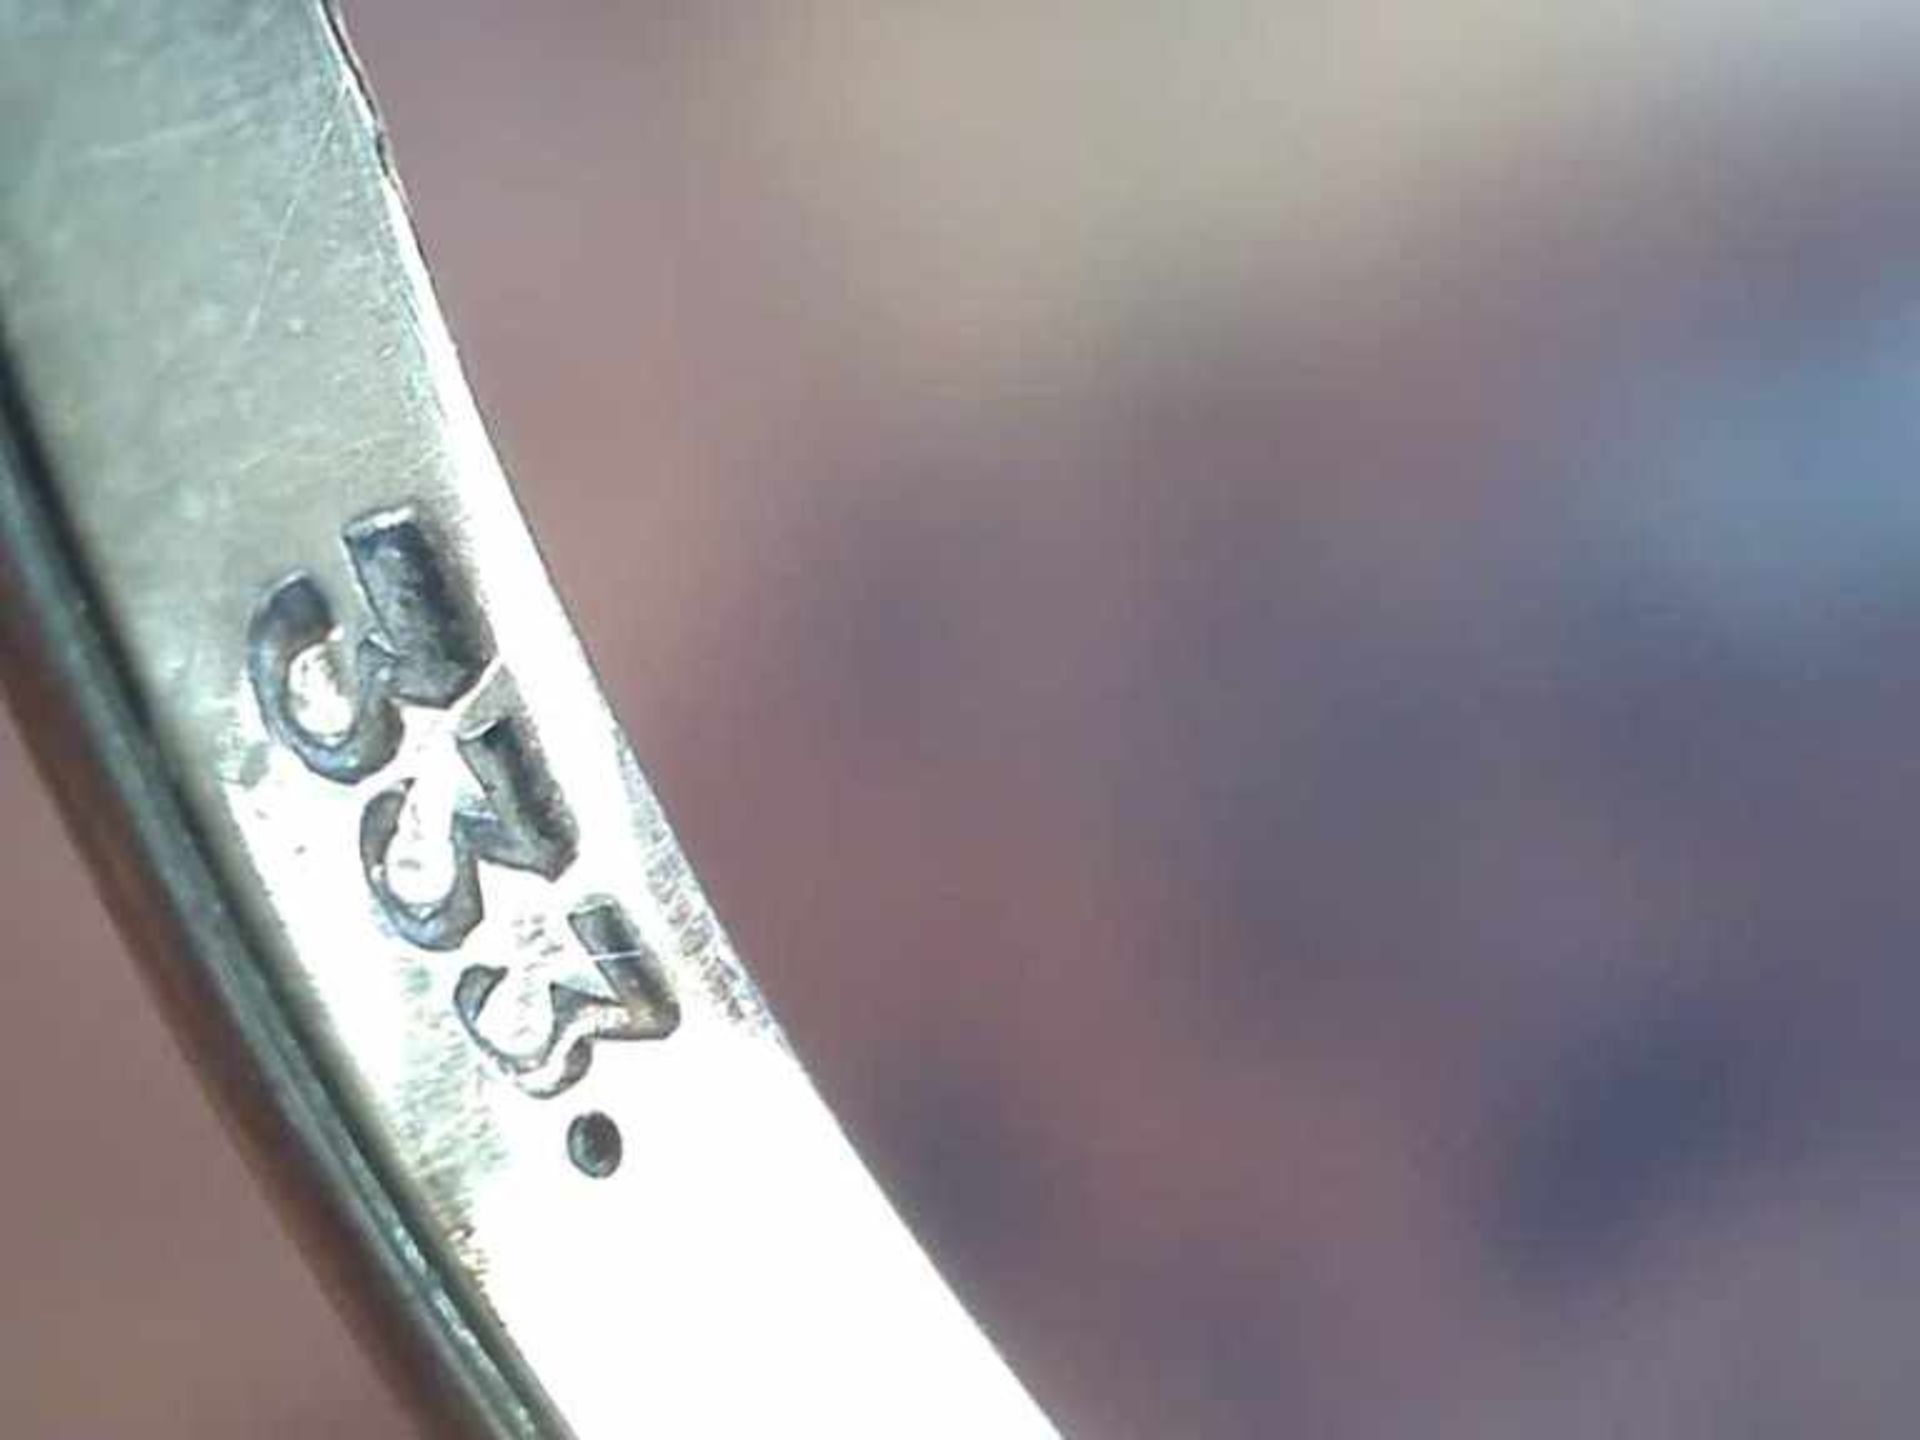 Damenring 333er GG, 3,5 g, ovaler Ringkopf mit einem Amethystcabochon, RG 60 - Image 2 of 2